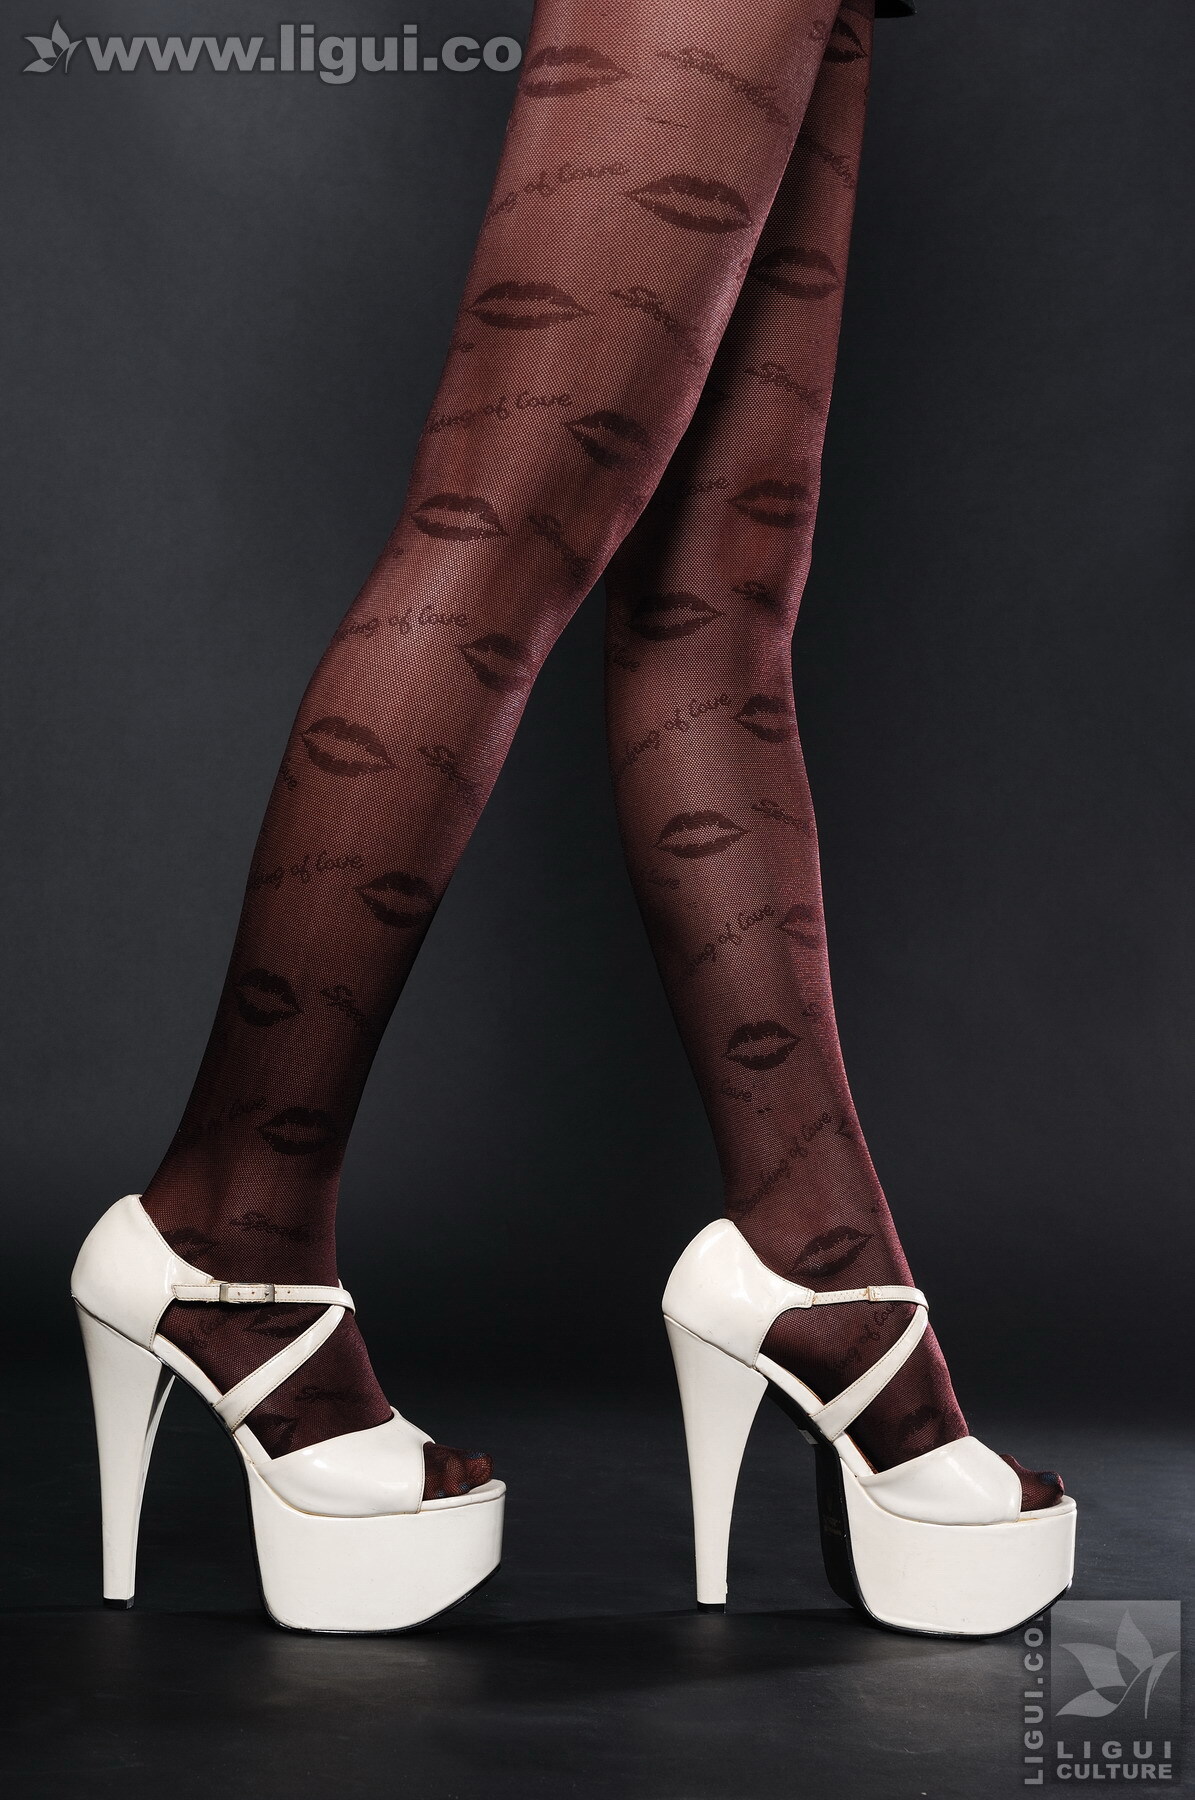 Ligui - sexy and charming silk stockings